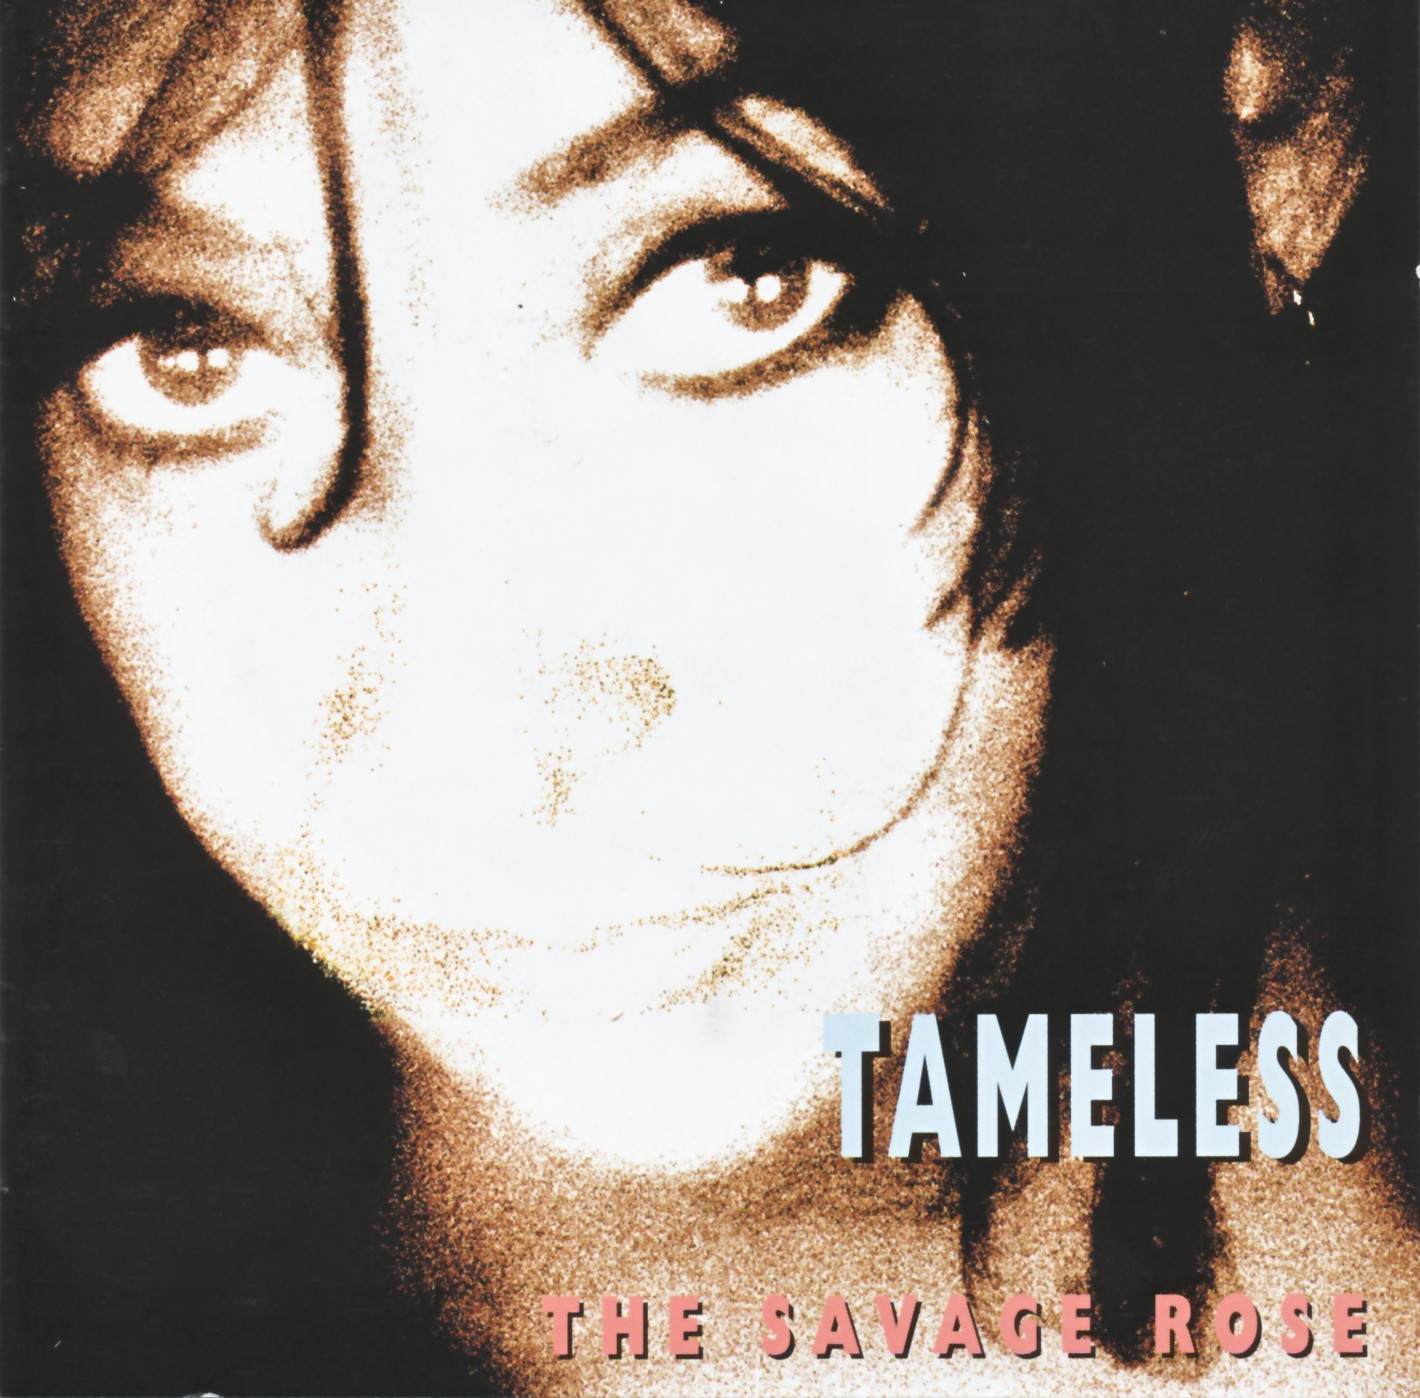 The Savage Rose - Tameless